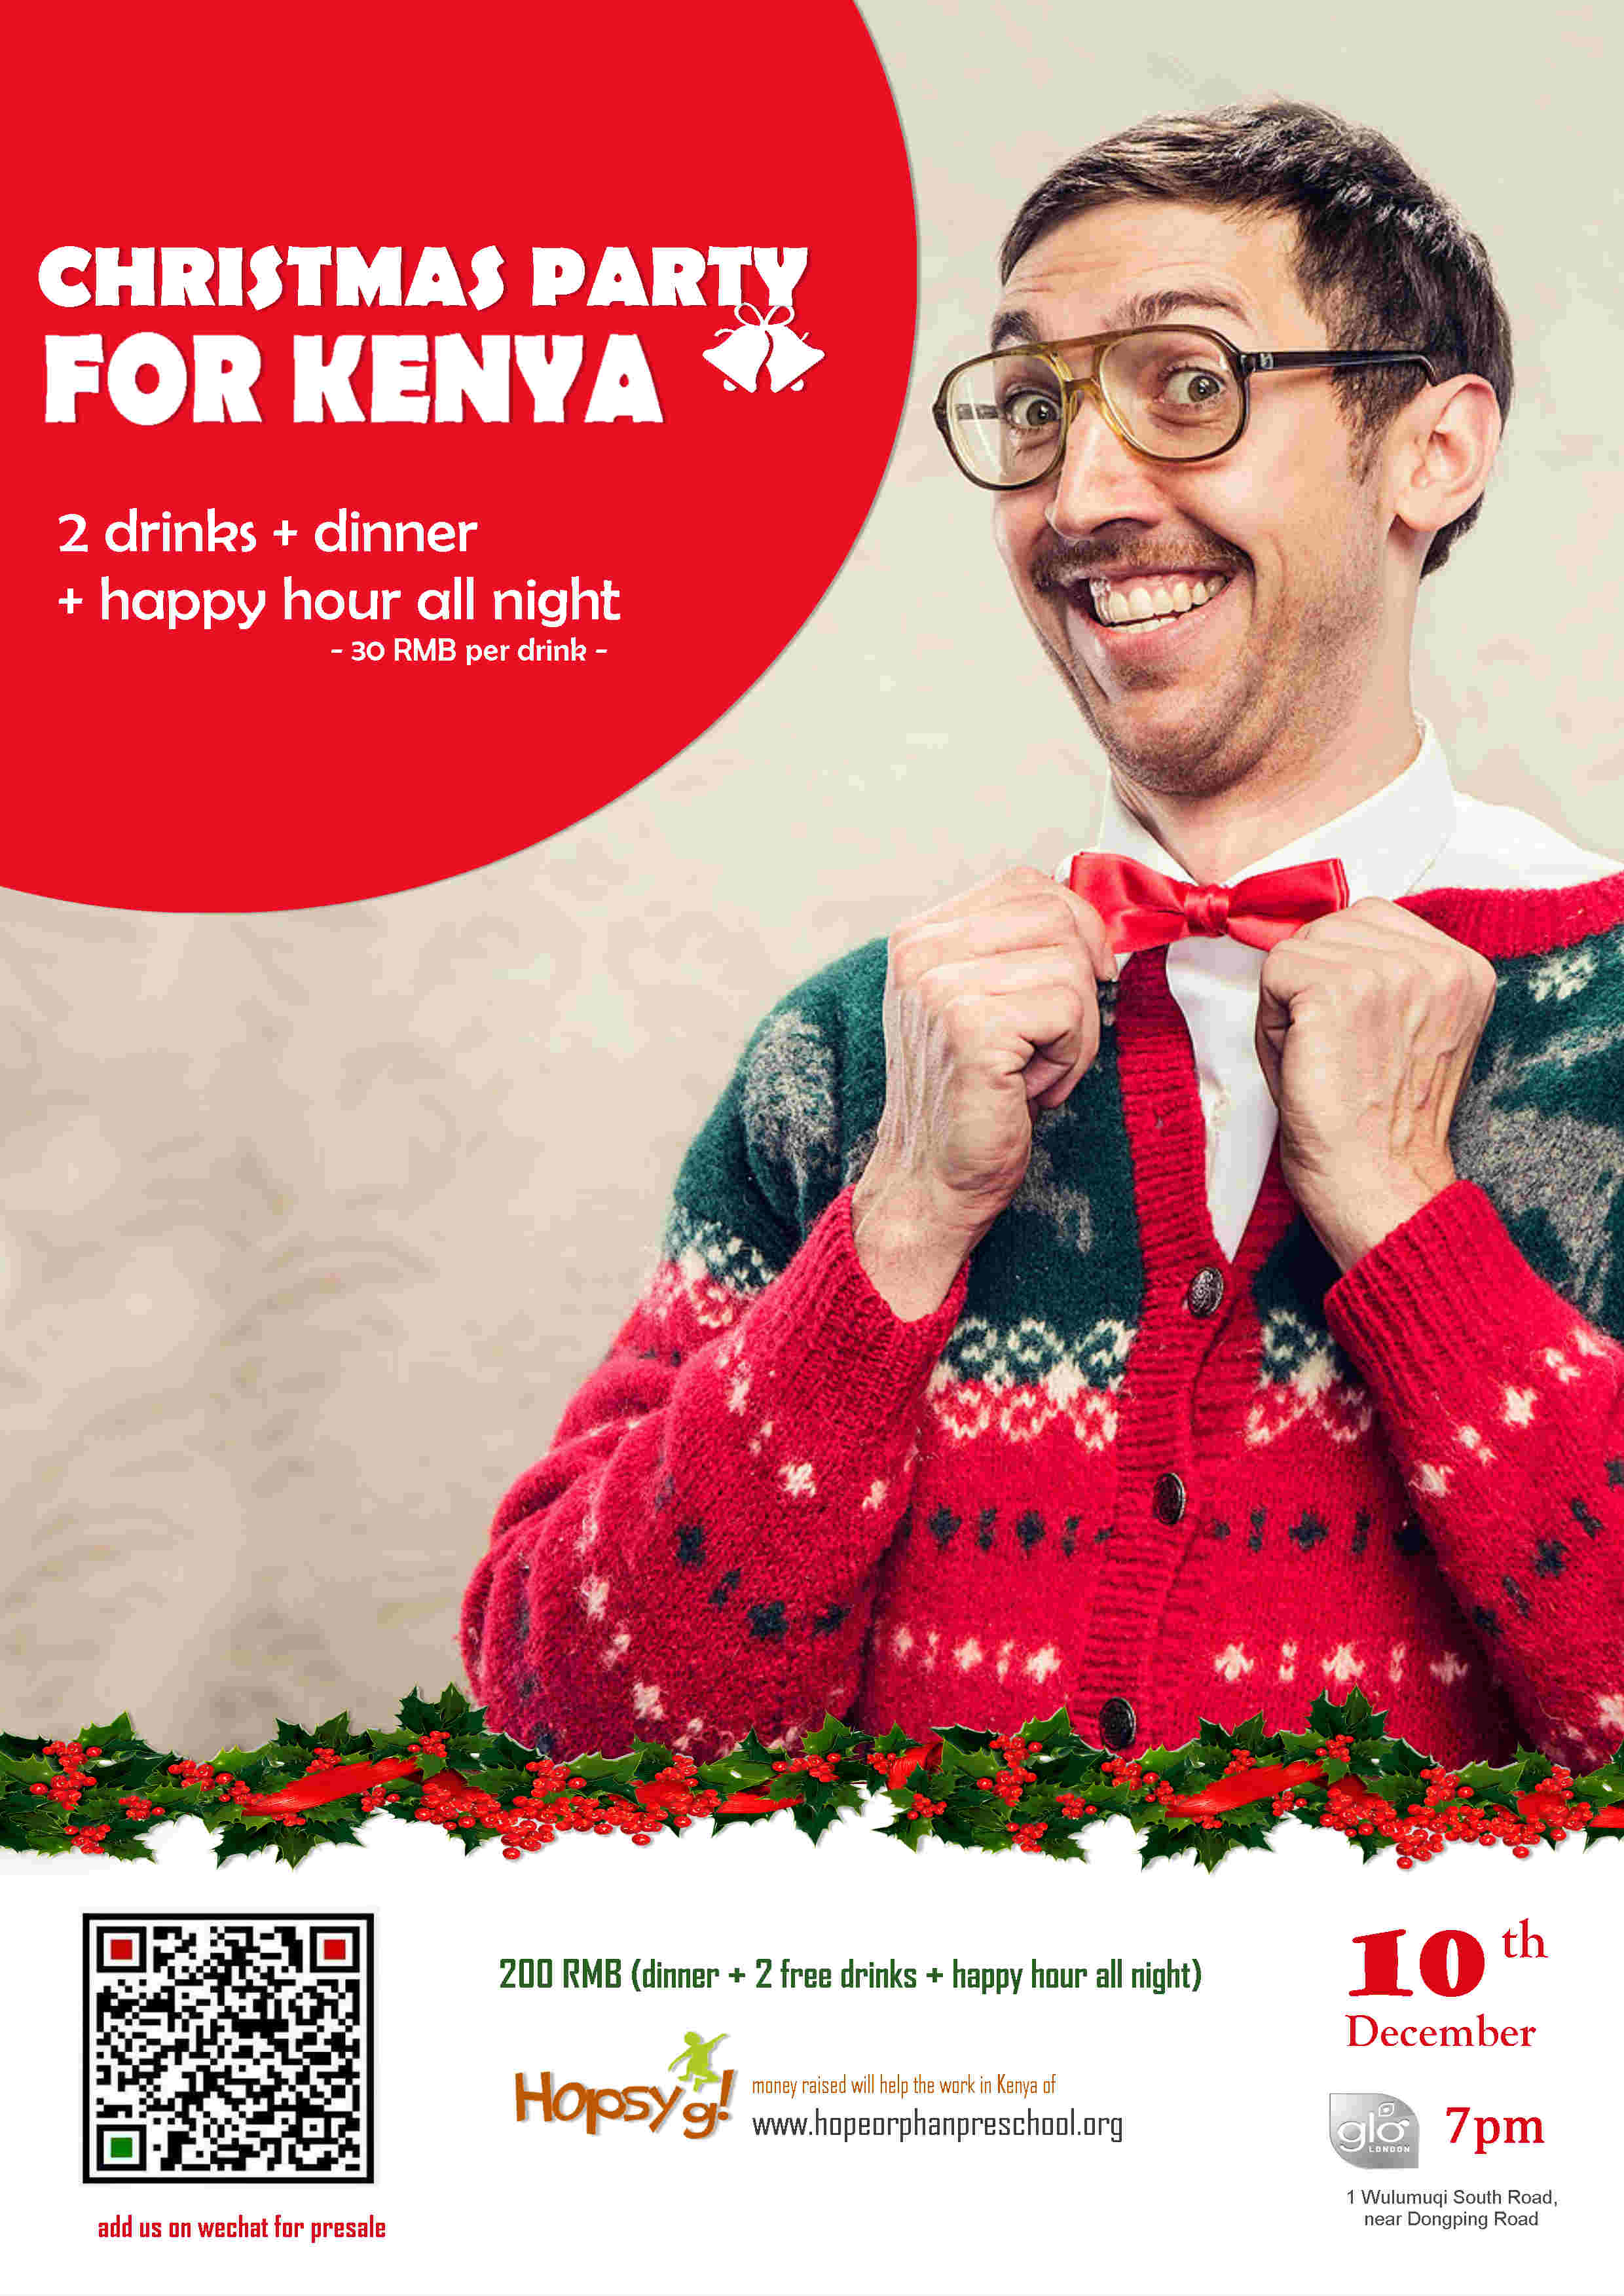 Dec 10: Christmas Party for Kenya